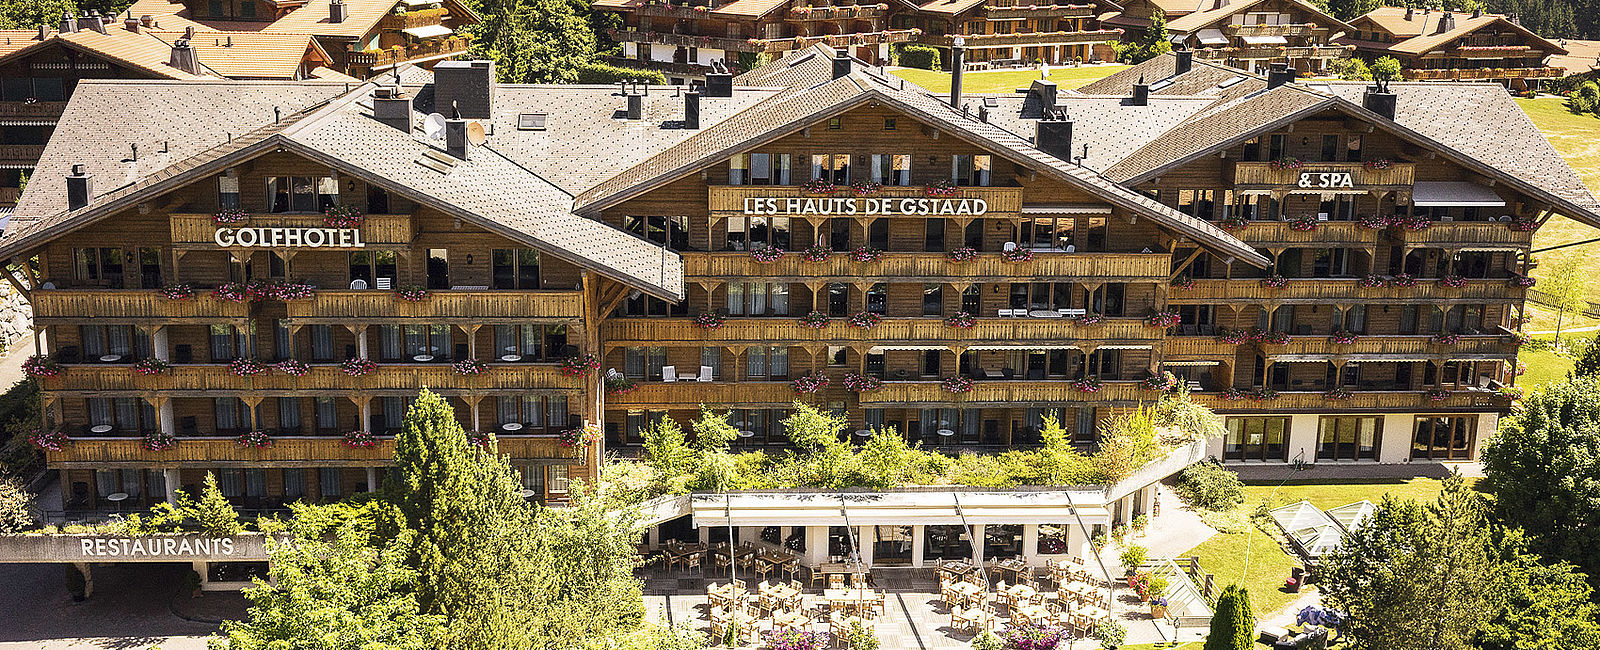 VERY SPECIAL HOTEL
 Golfhotel Les Hauts de Gstaad u. SPA, Gstaad Saanenland 
 Edles Hideaway im Berner Oberland 